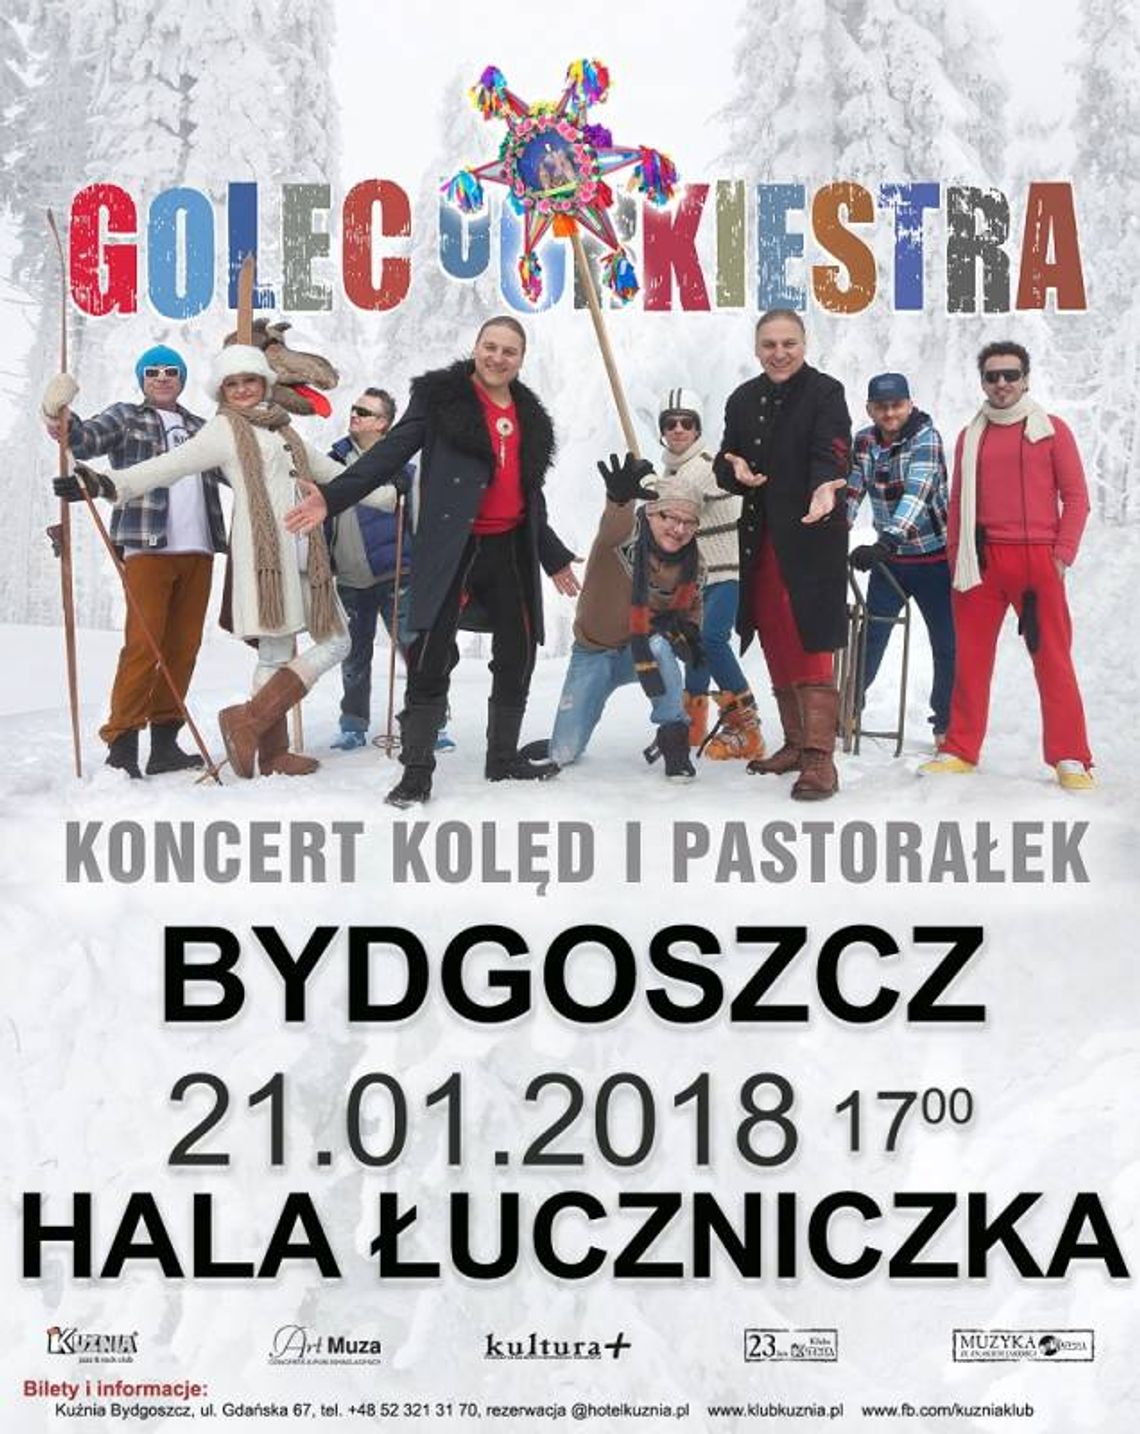 GOLEC uORKIESTRA - koncert kolęd i pastorałek